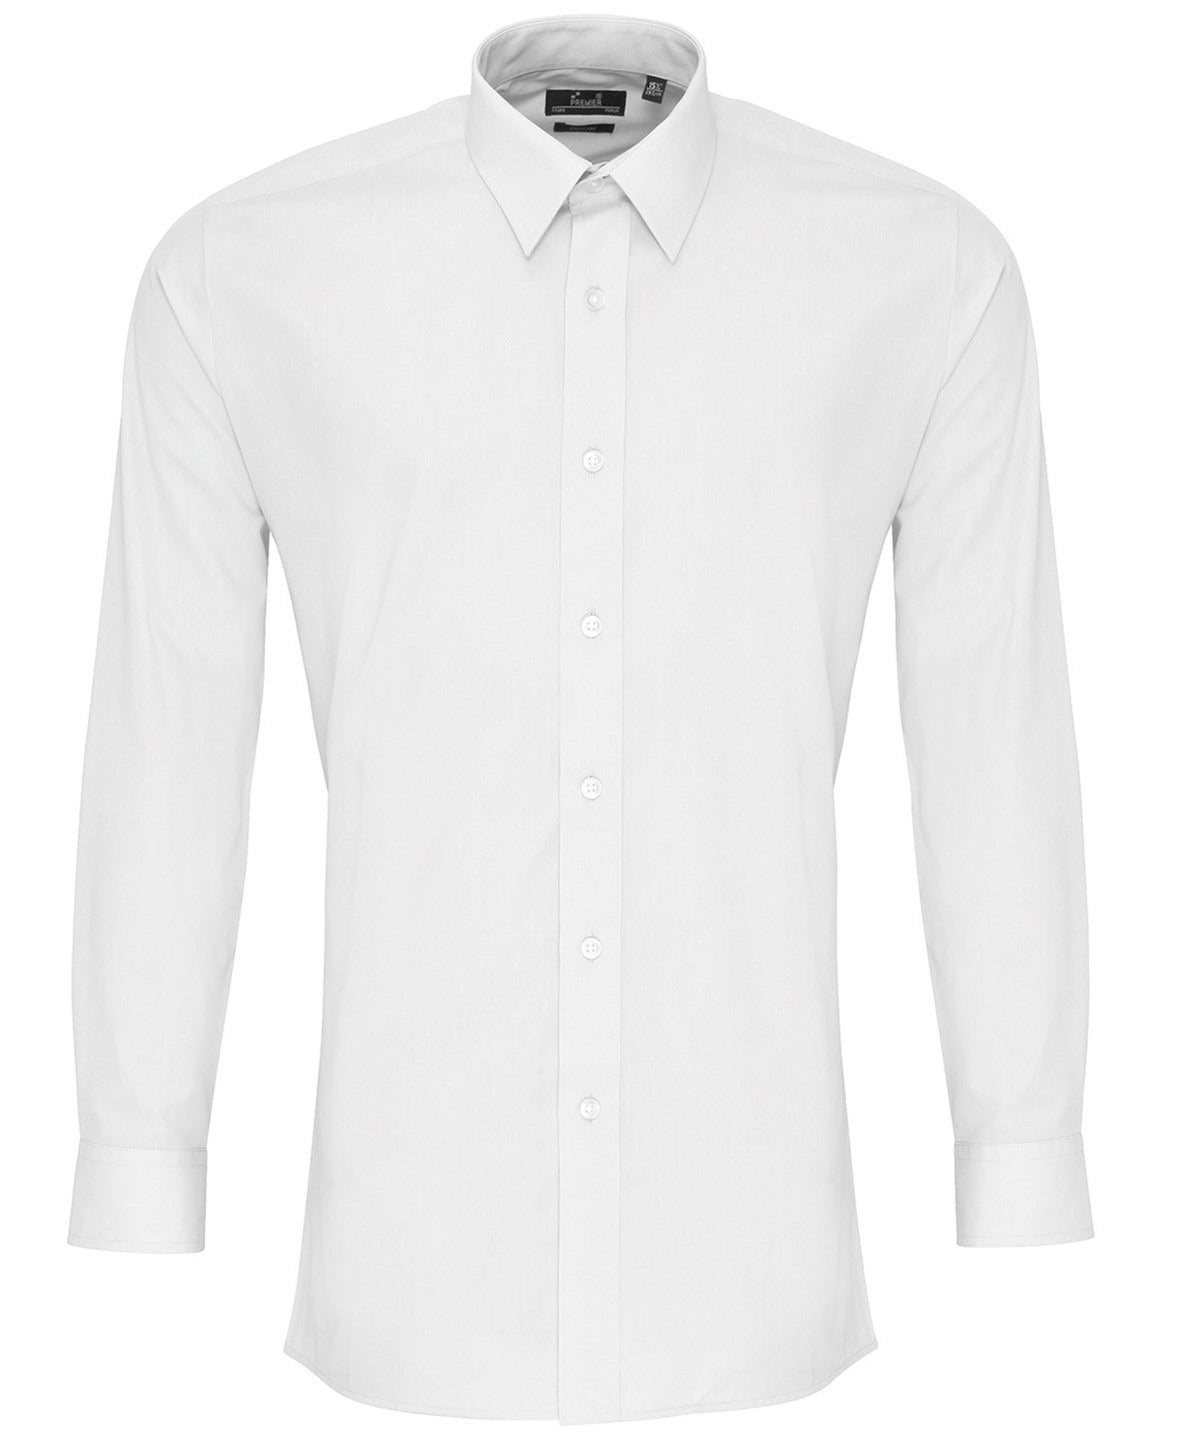 Bolir - Poplin Fitted Long Sleeve Shirt